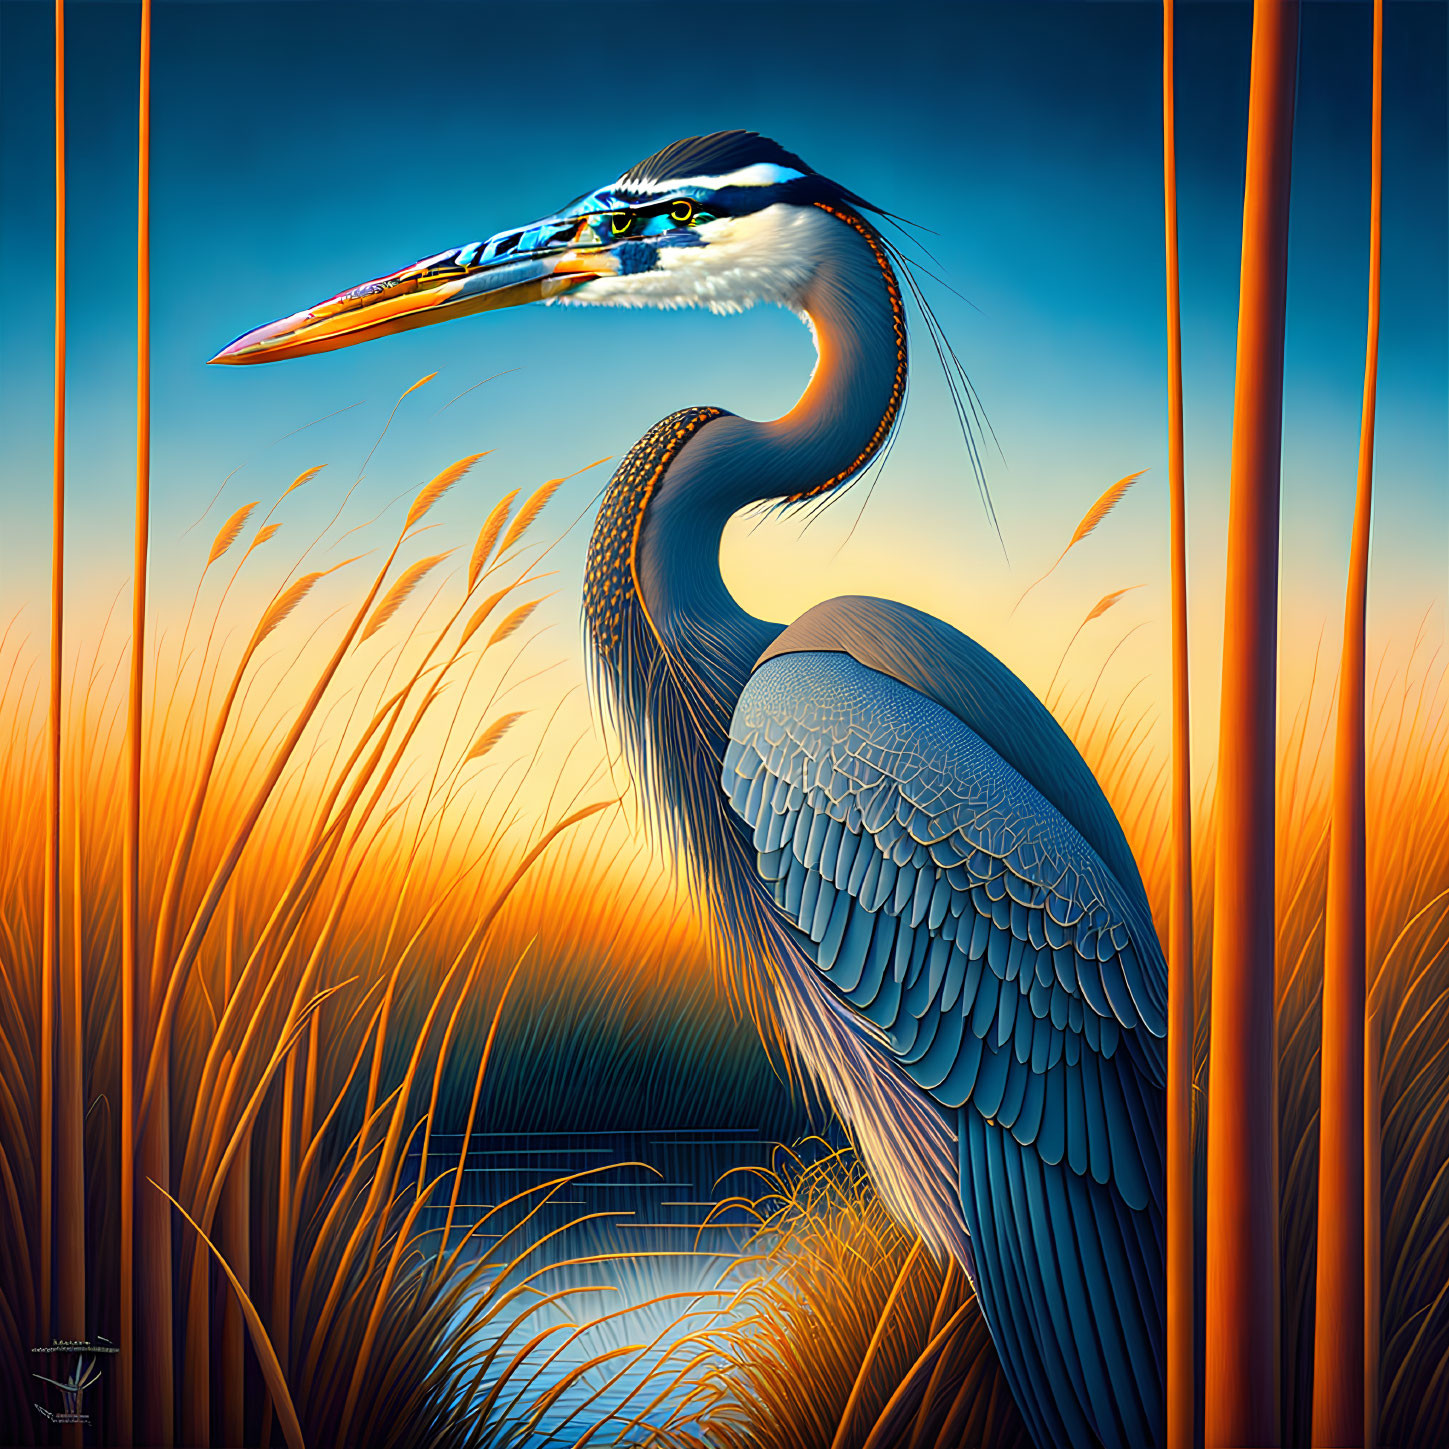 Detailed Great Blue Heron Illustration in Sunset Setting